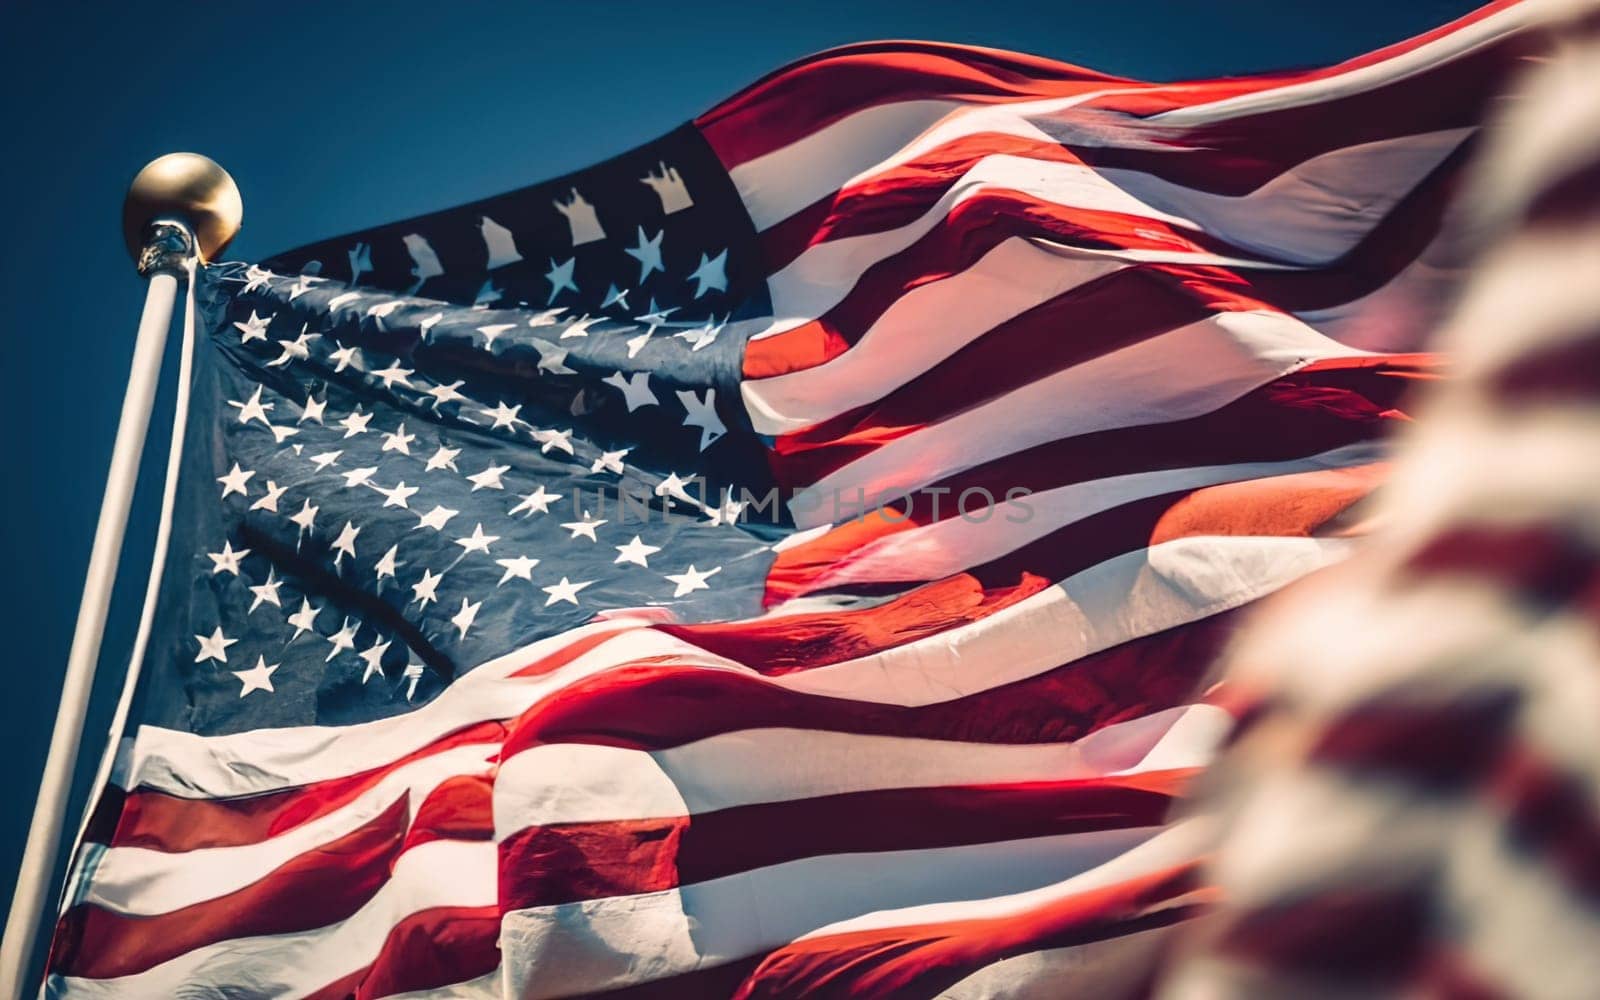 USA Flag Background - Patriotic American Flag Illustration in Stylish Deep Blue download image